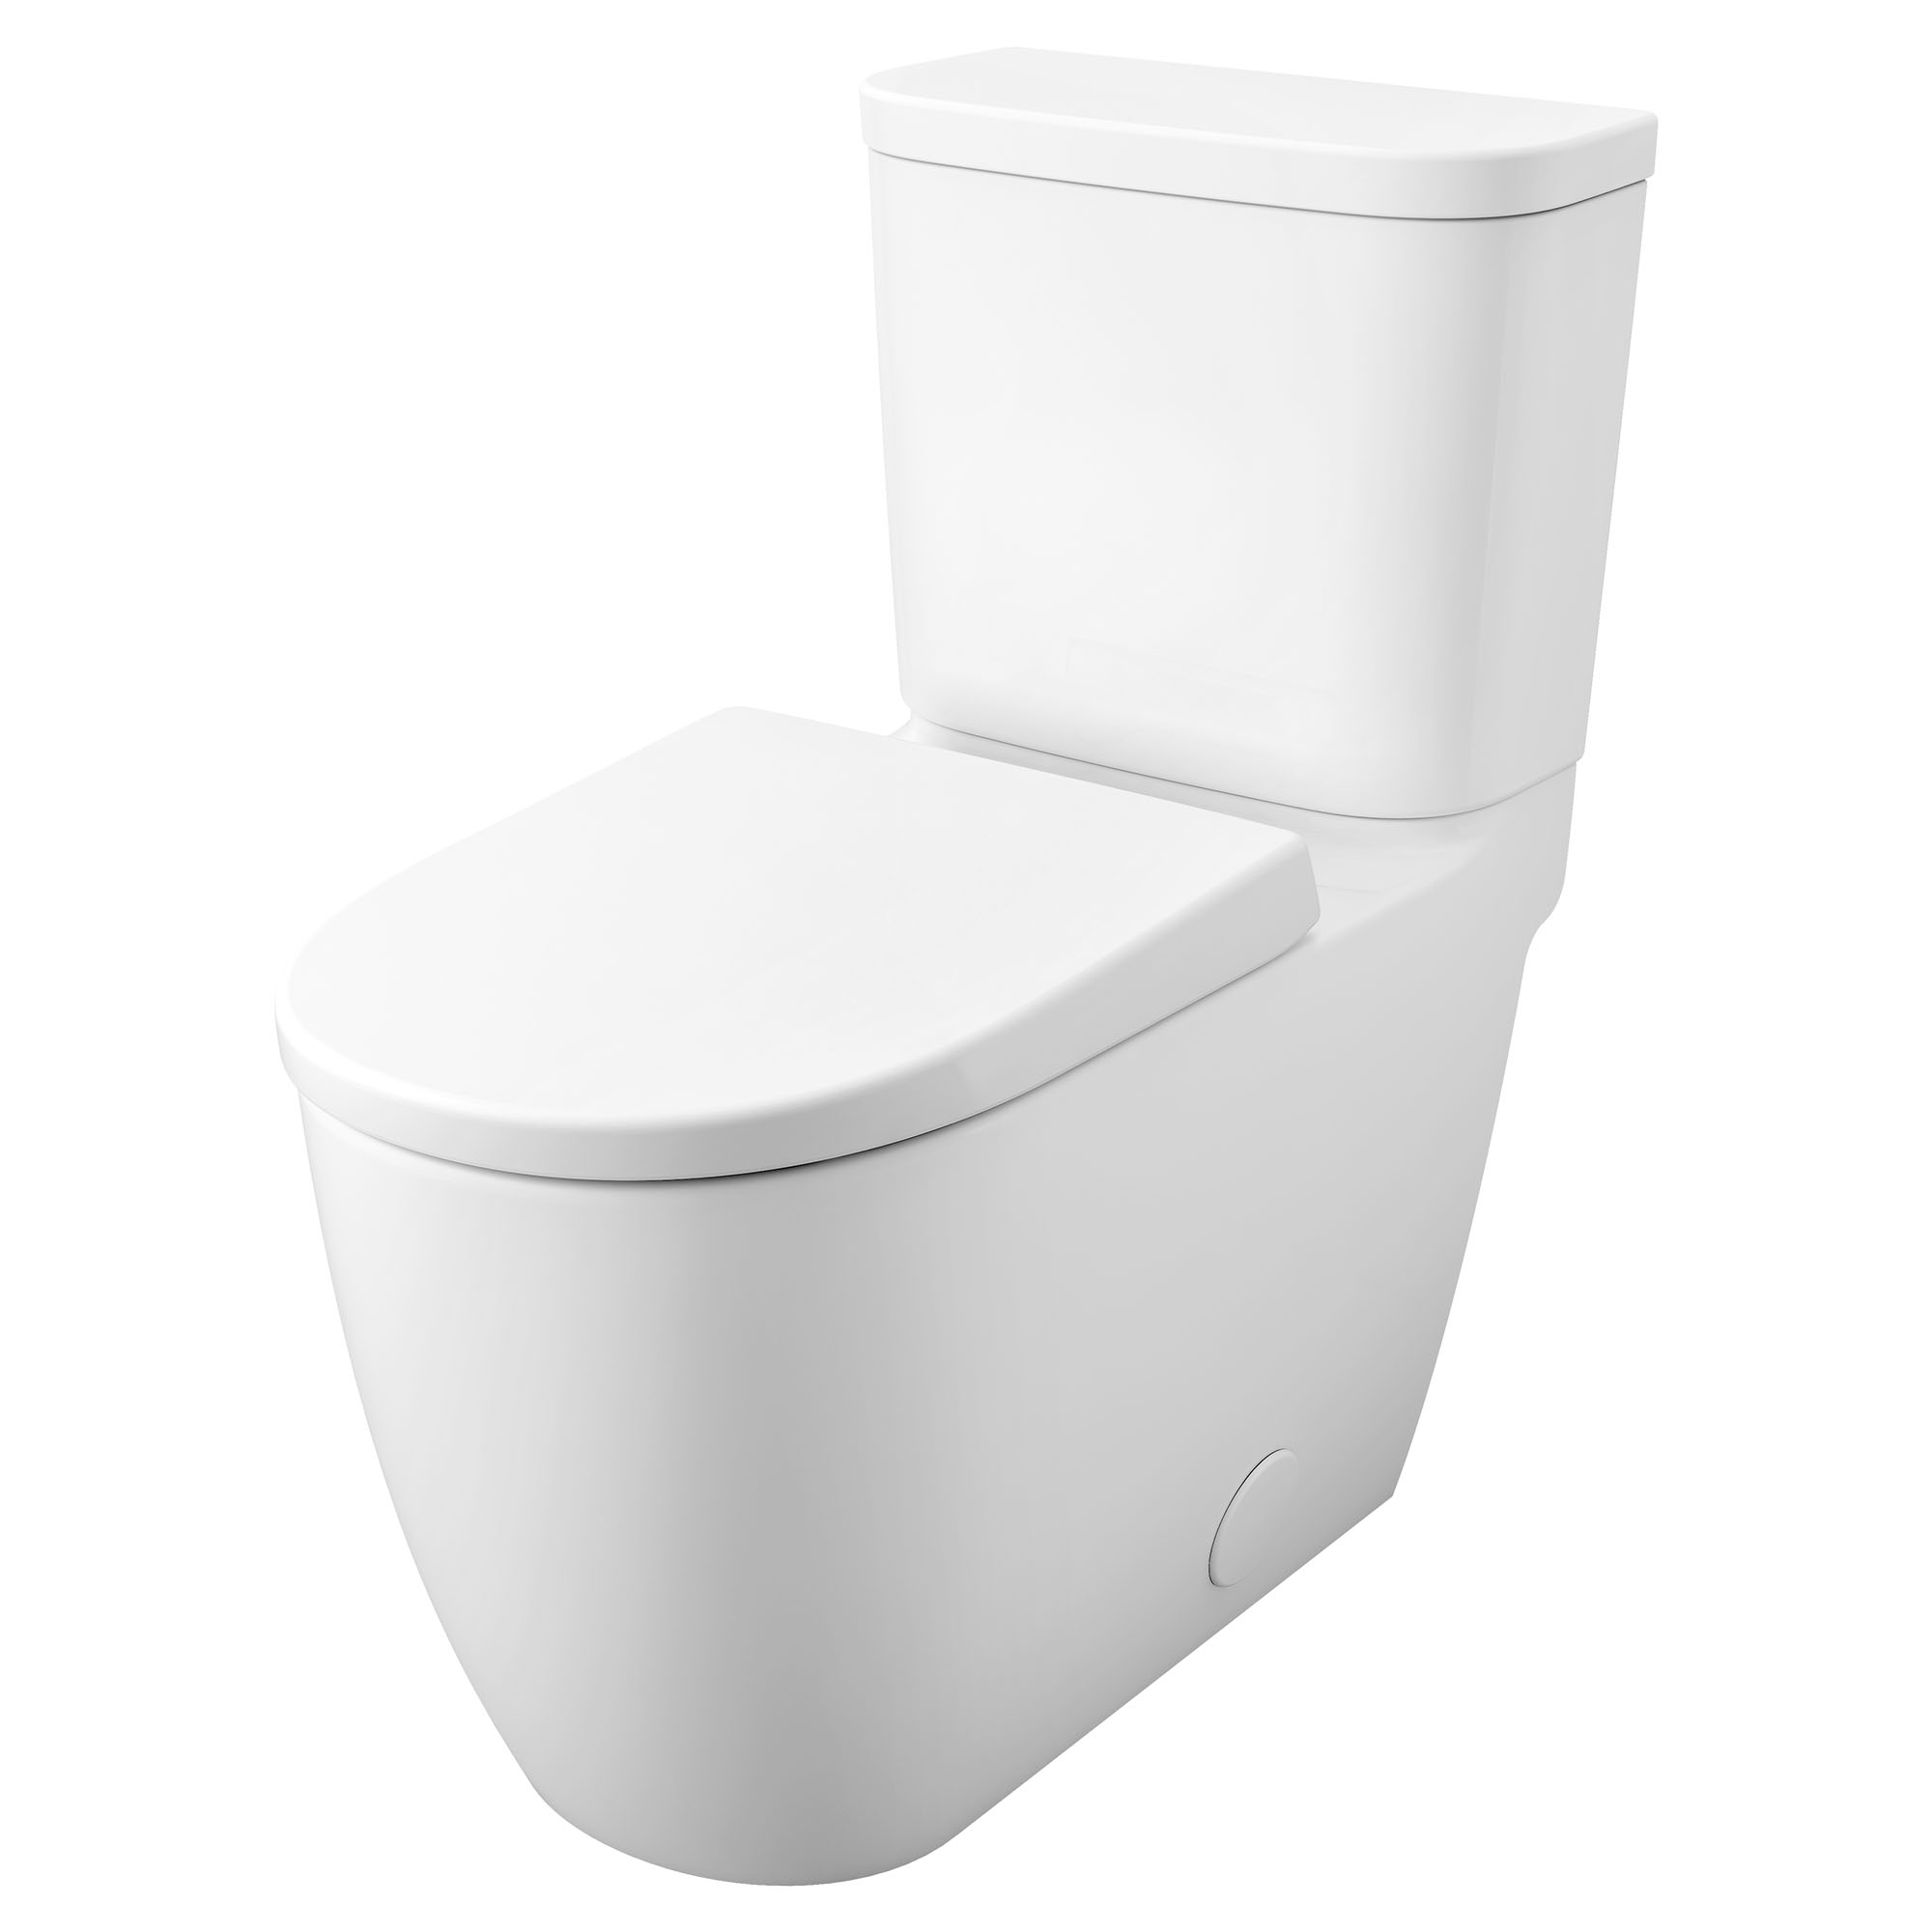 2-piece 4.8 Lpf (1.28 gpf) Right Height Elongated Toilet